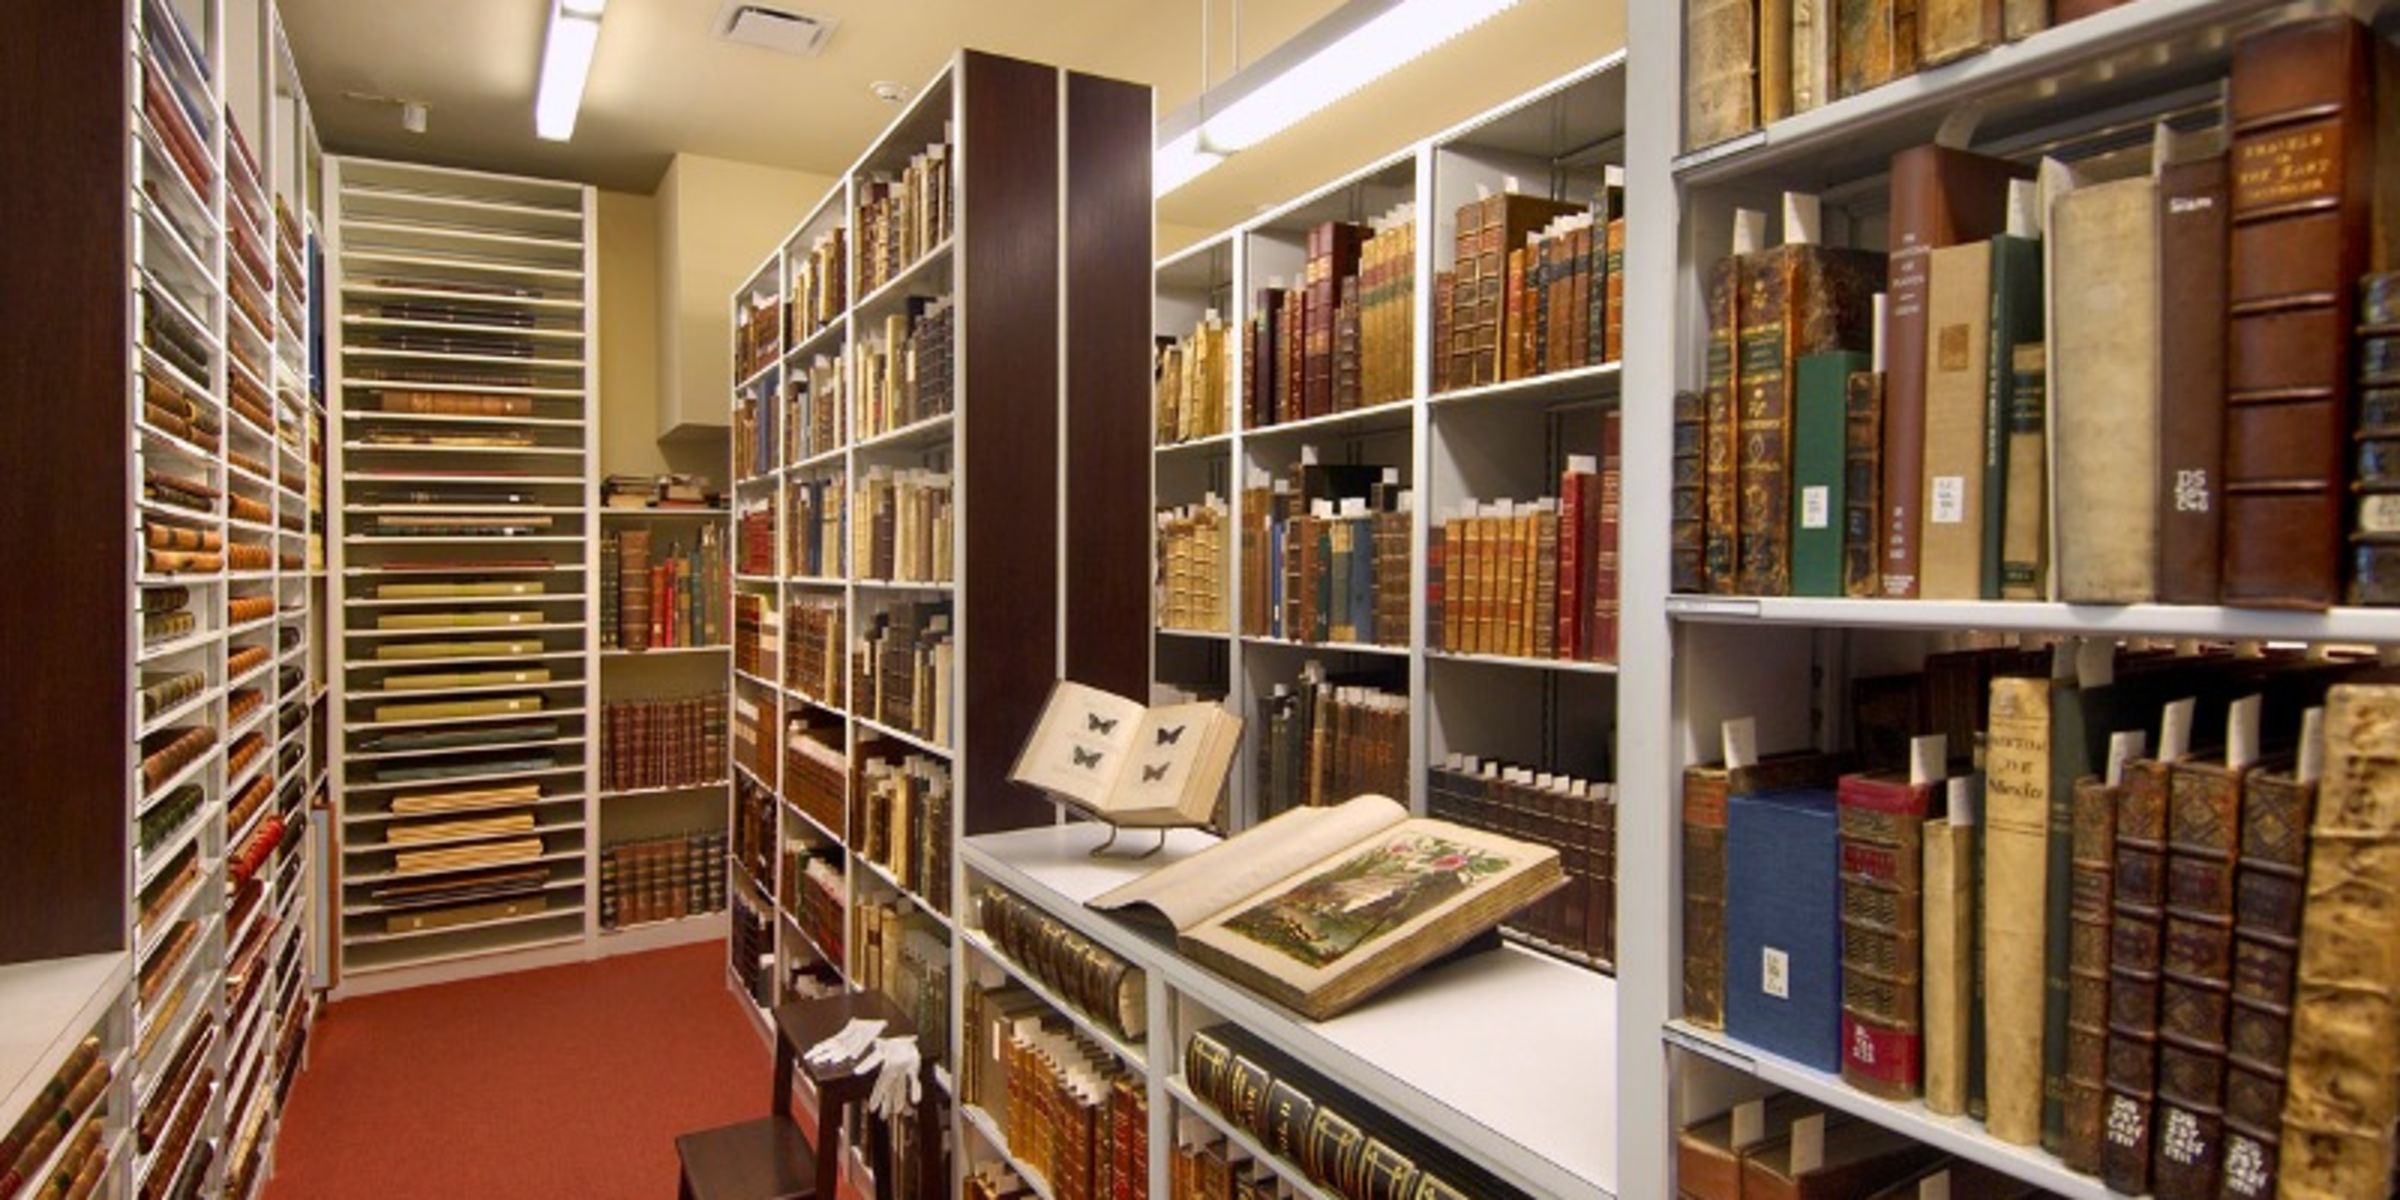 Media for Rare Book Room